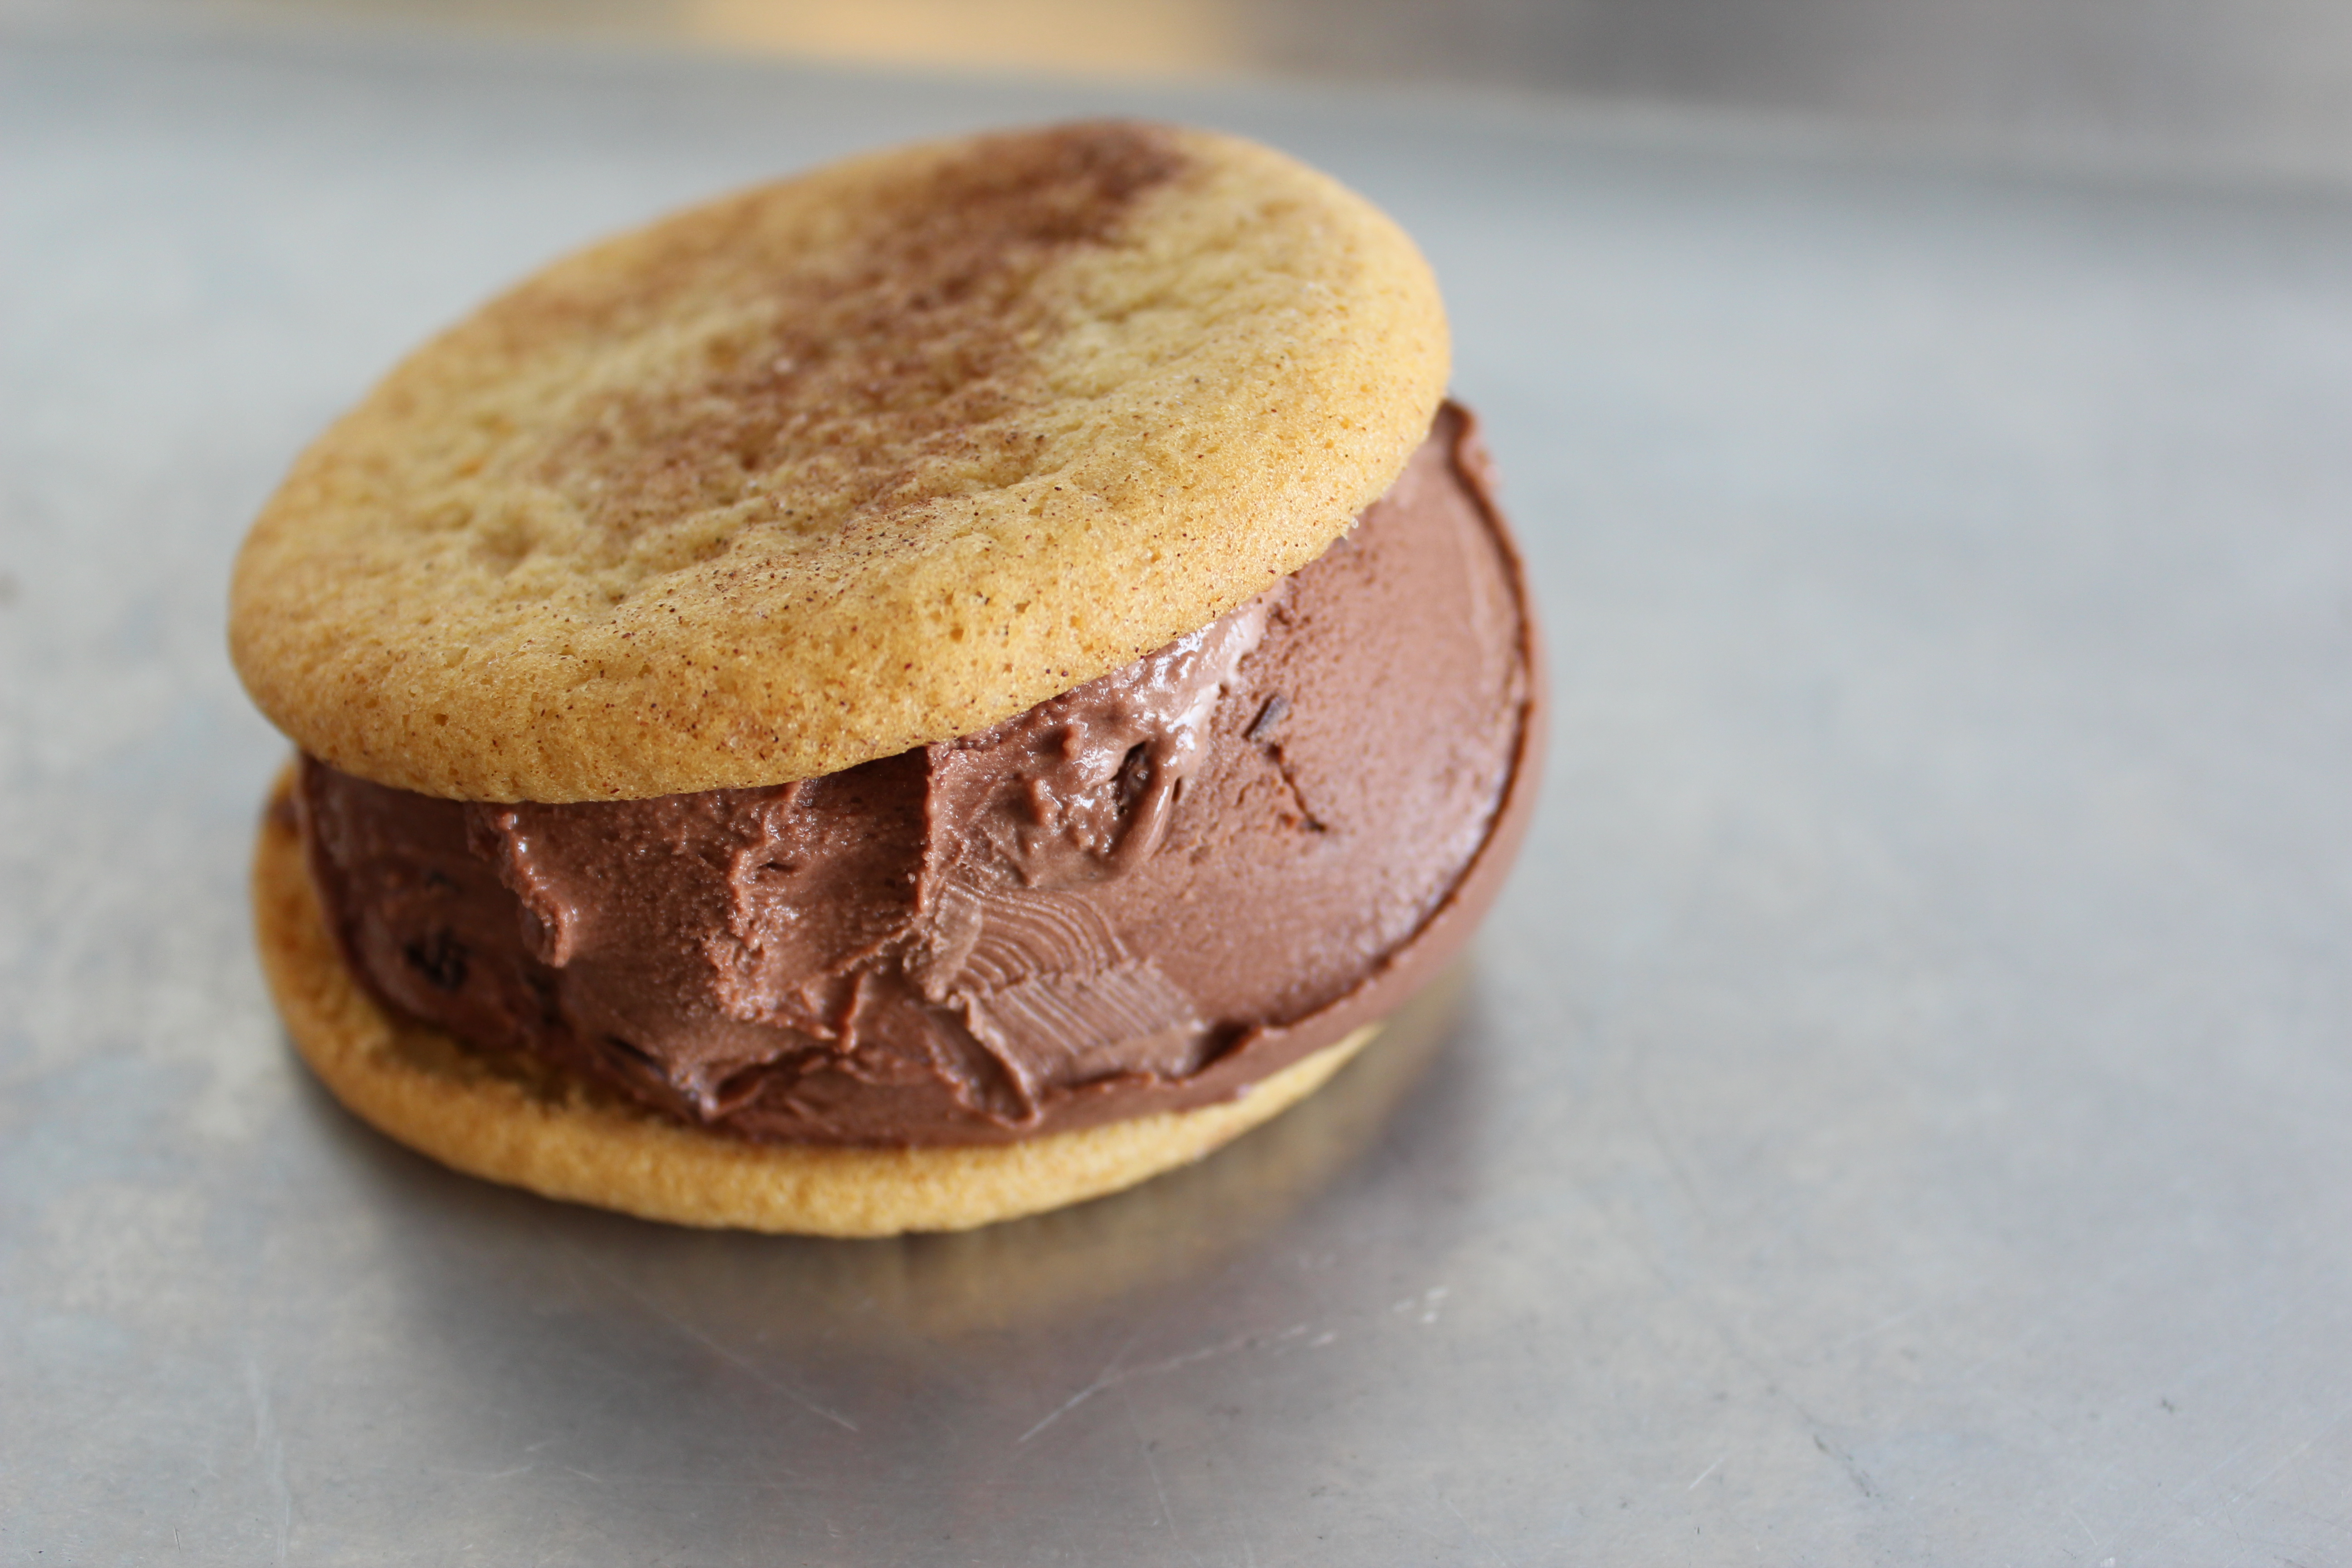 Snickerdoodle Cookie + Patrón XO Dark Salted Chocolate Ice Cream